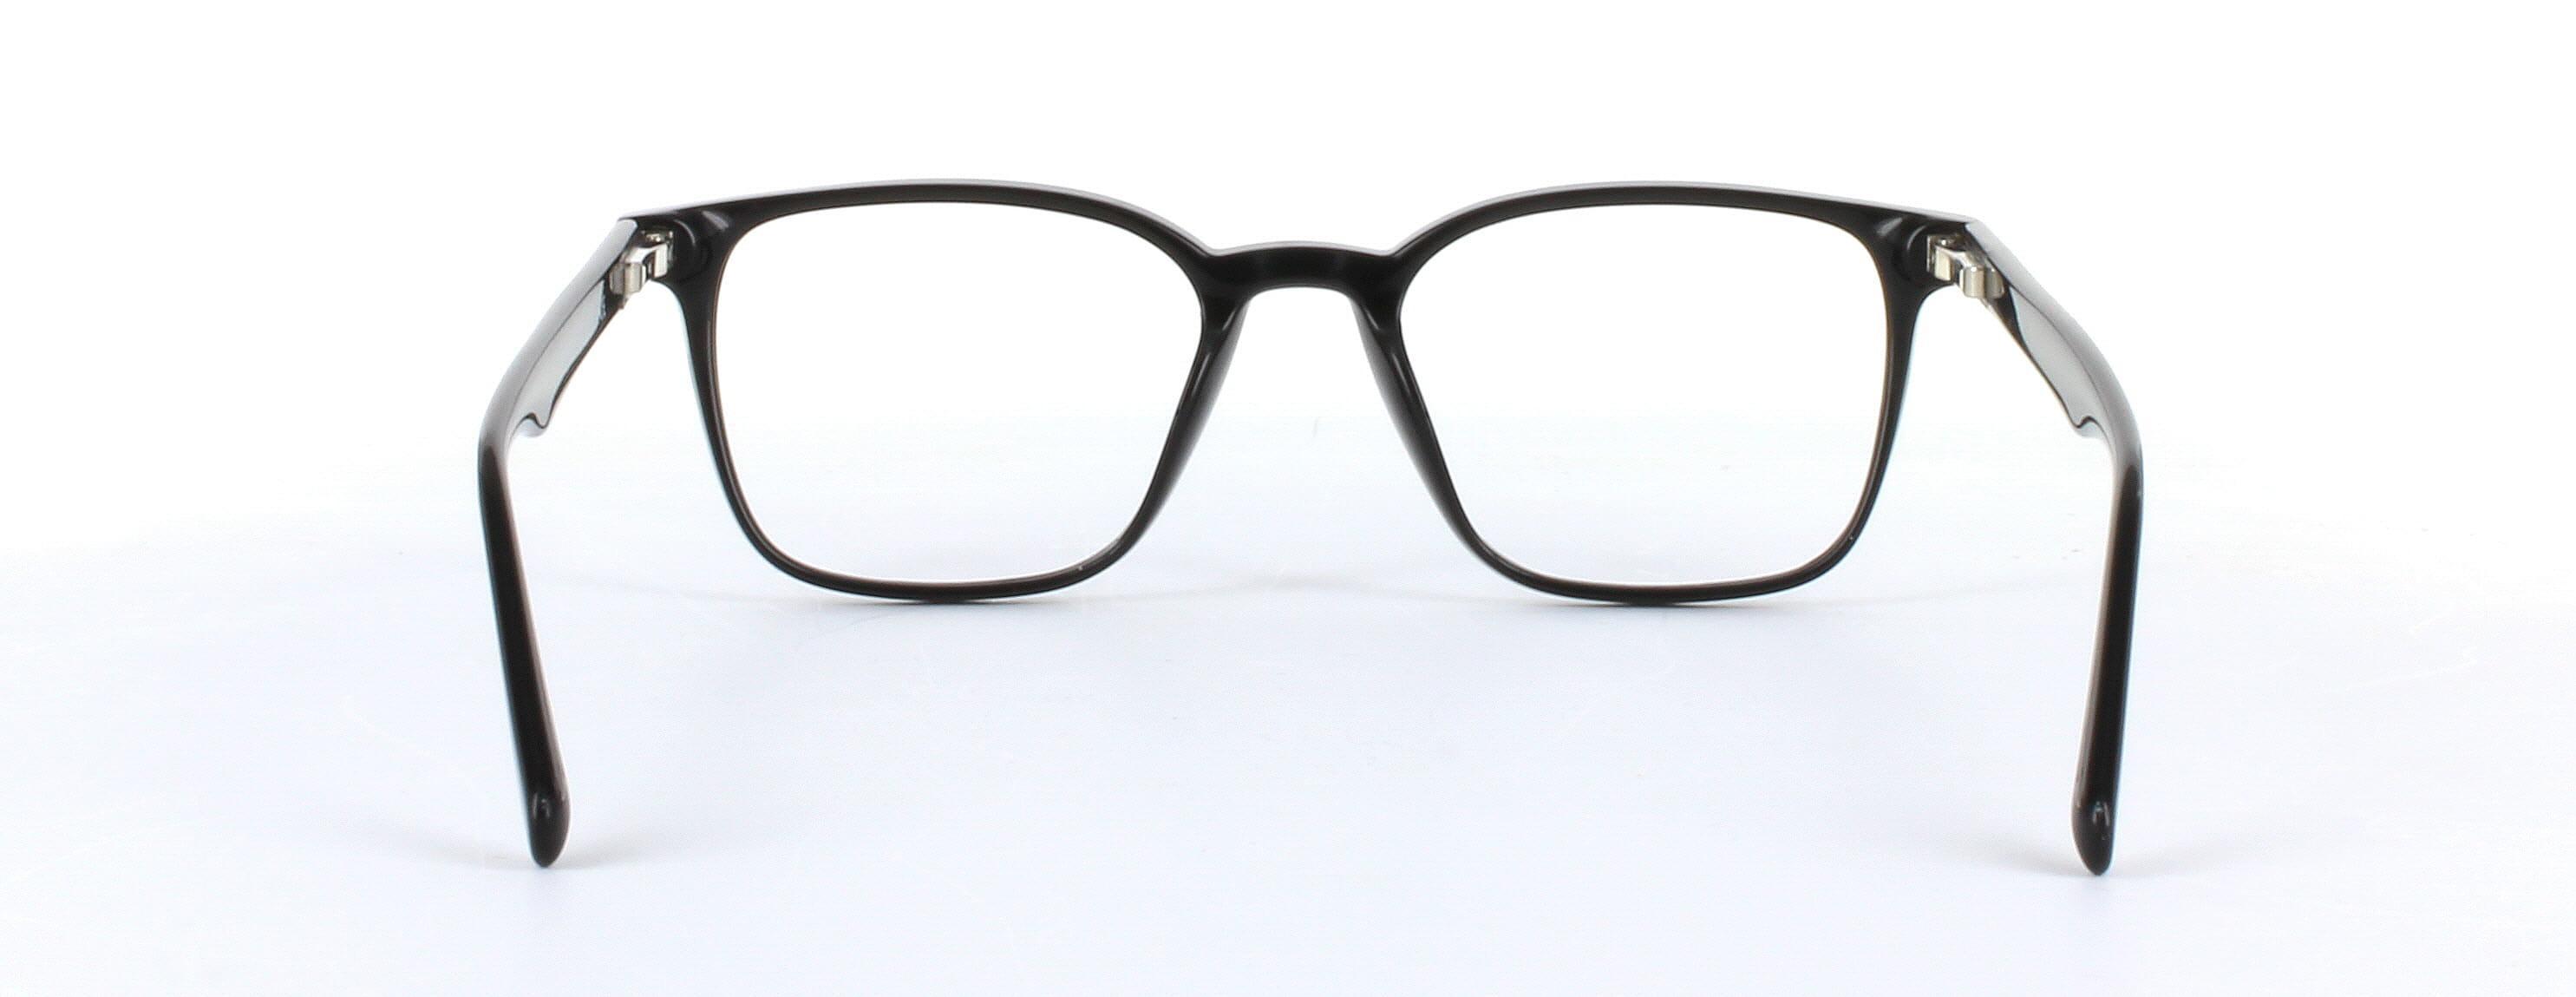 Hodson Black Full Rim Acetate Glasses - Image View 3